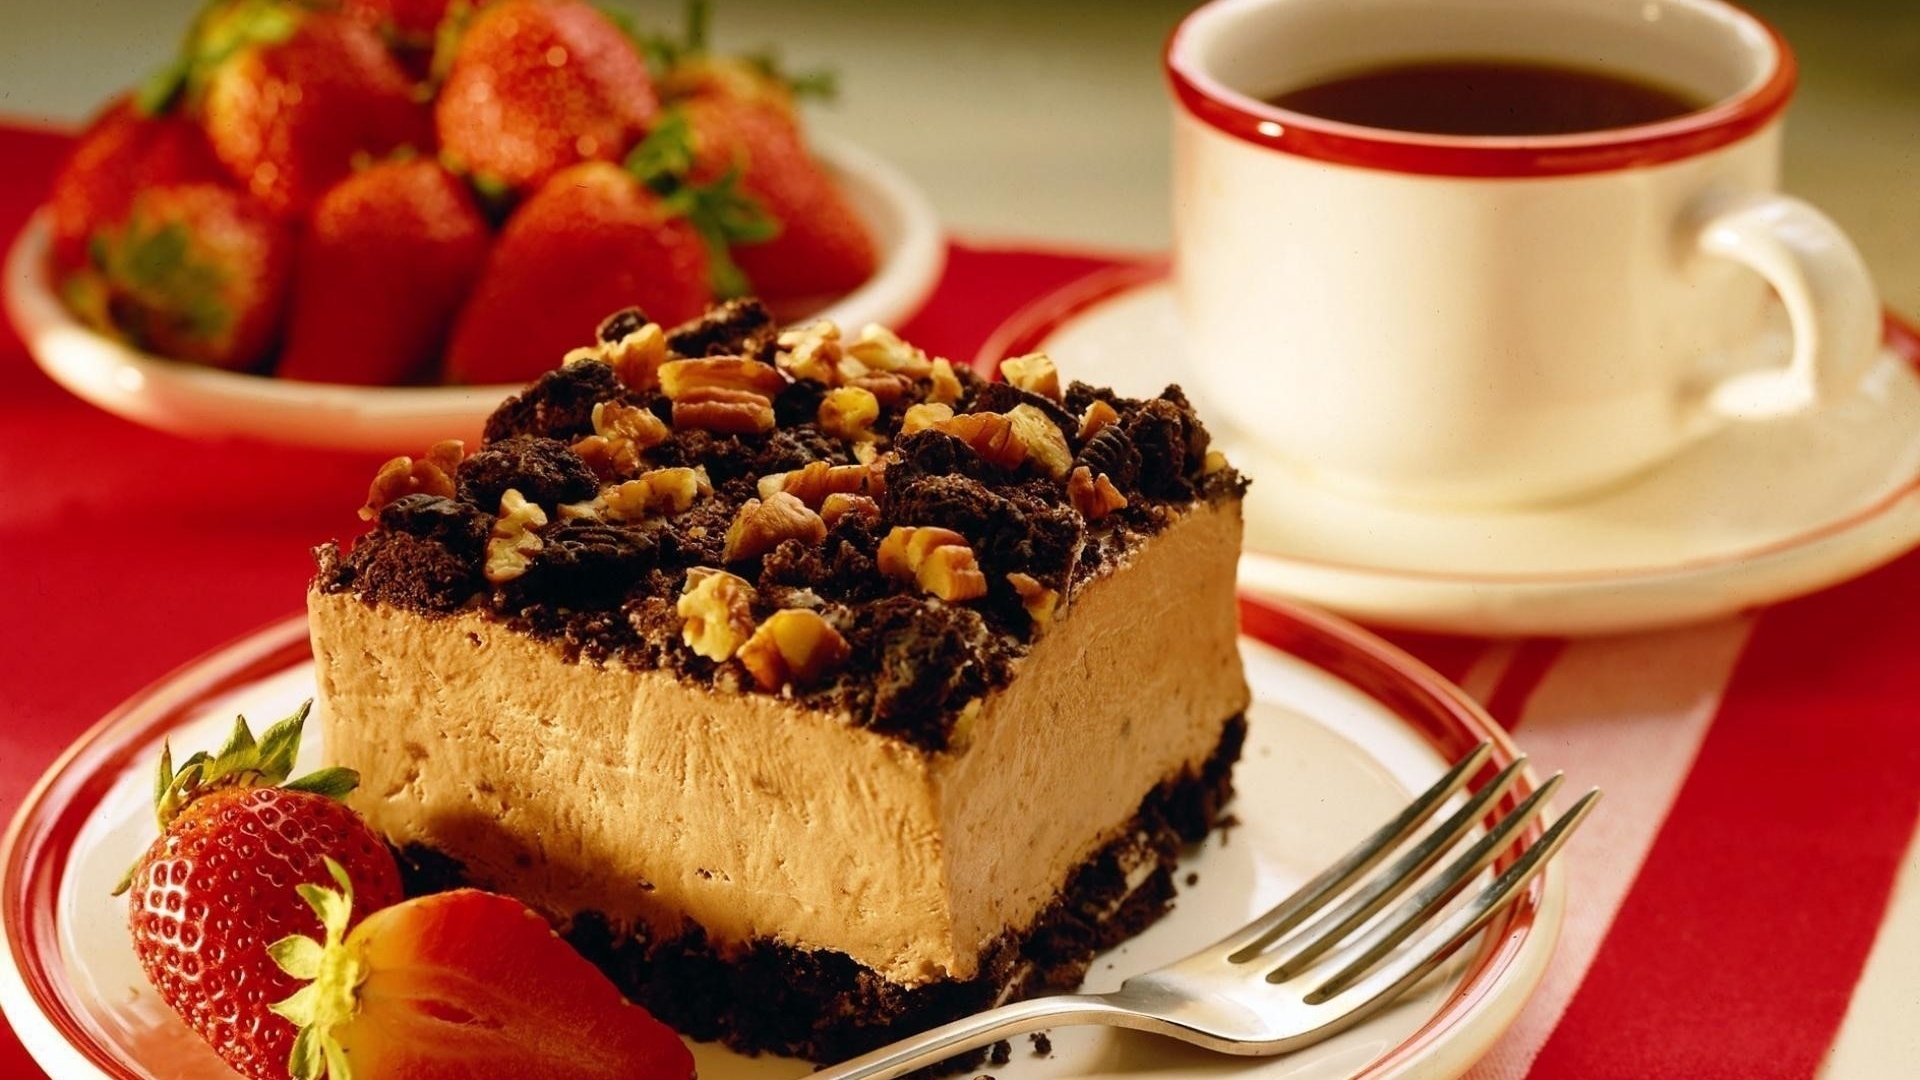 Image: Cake, sweet, dessert, berries, strawberry, tea